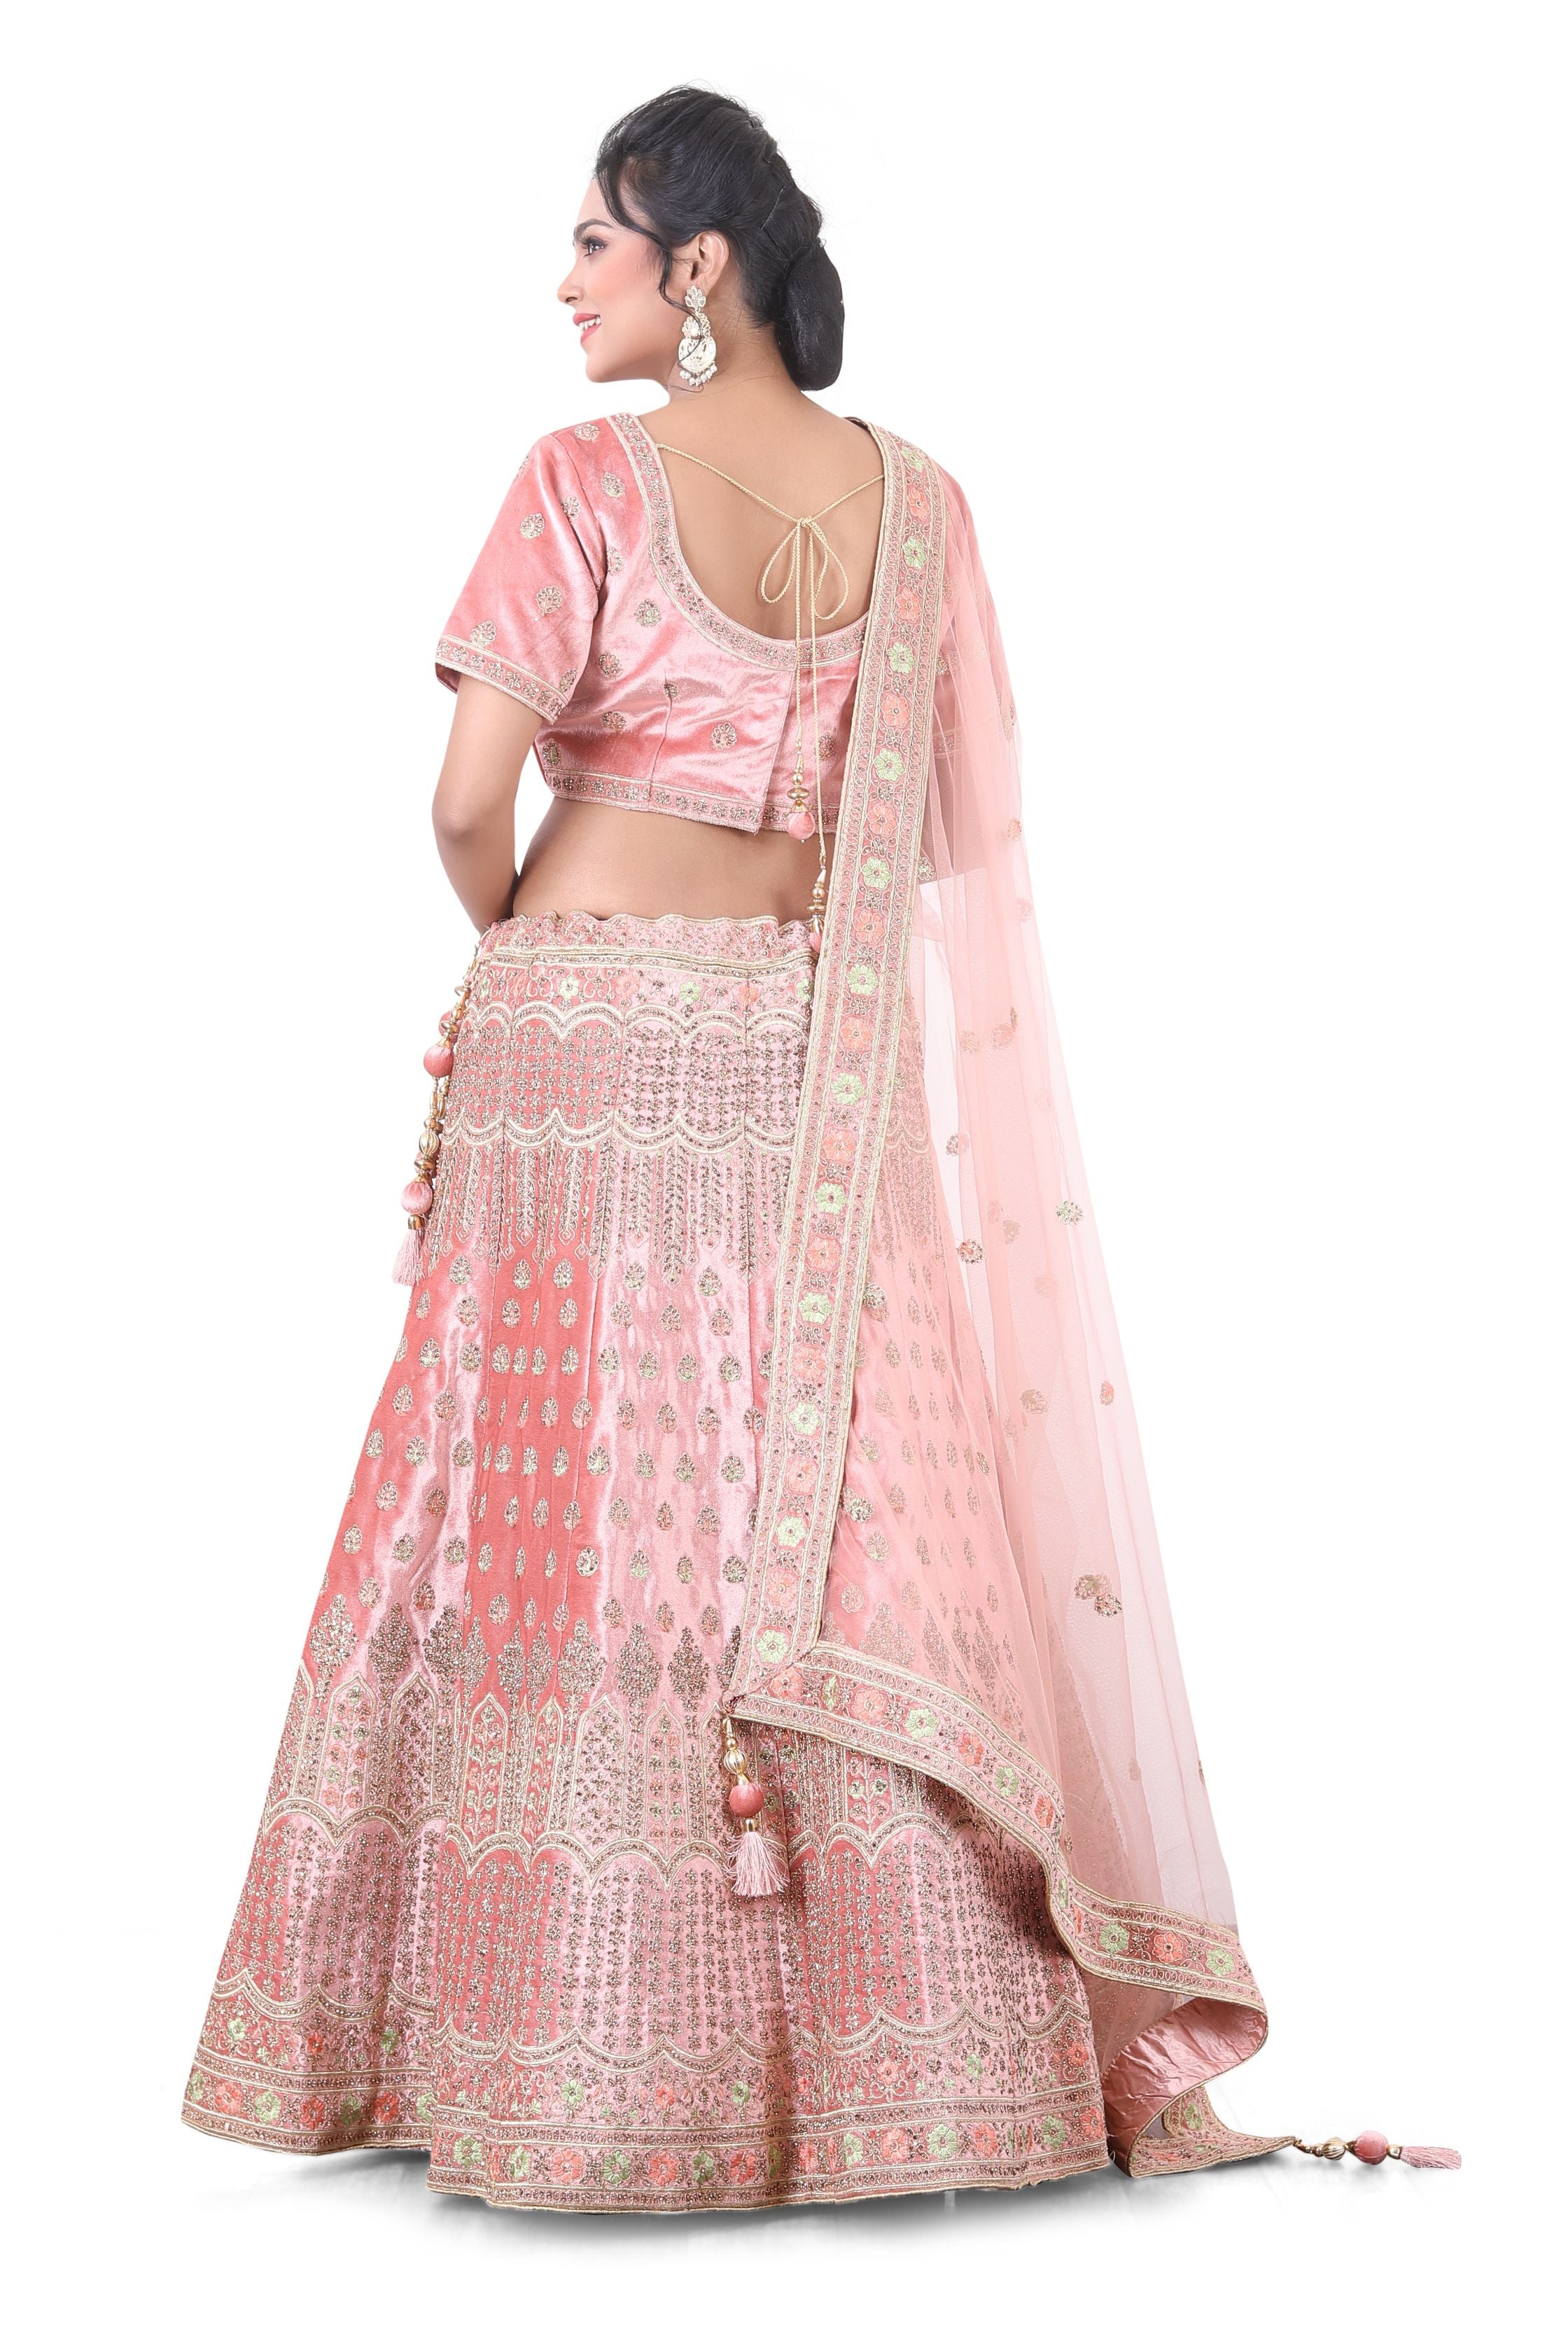 Baby Pink Velvet Lehenga Choli - Premium Partywear Lehenga from Dulhan Exclusives - Just $785! Shop now at Dulhan Exclusives